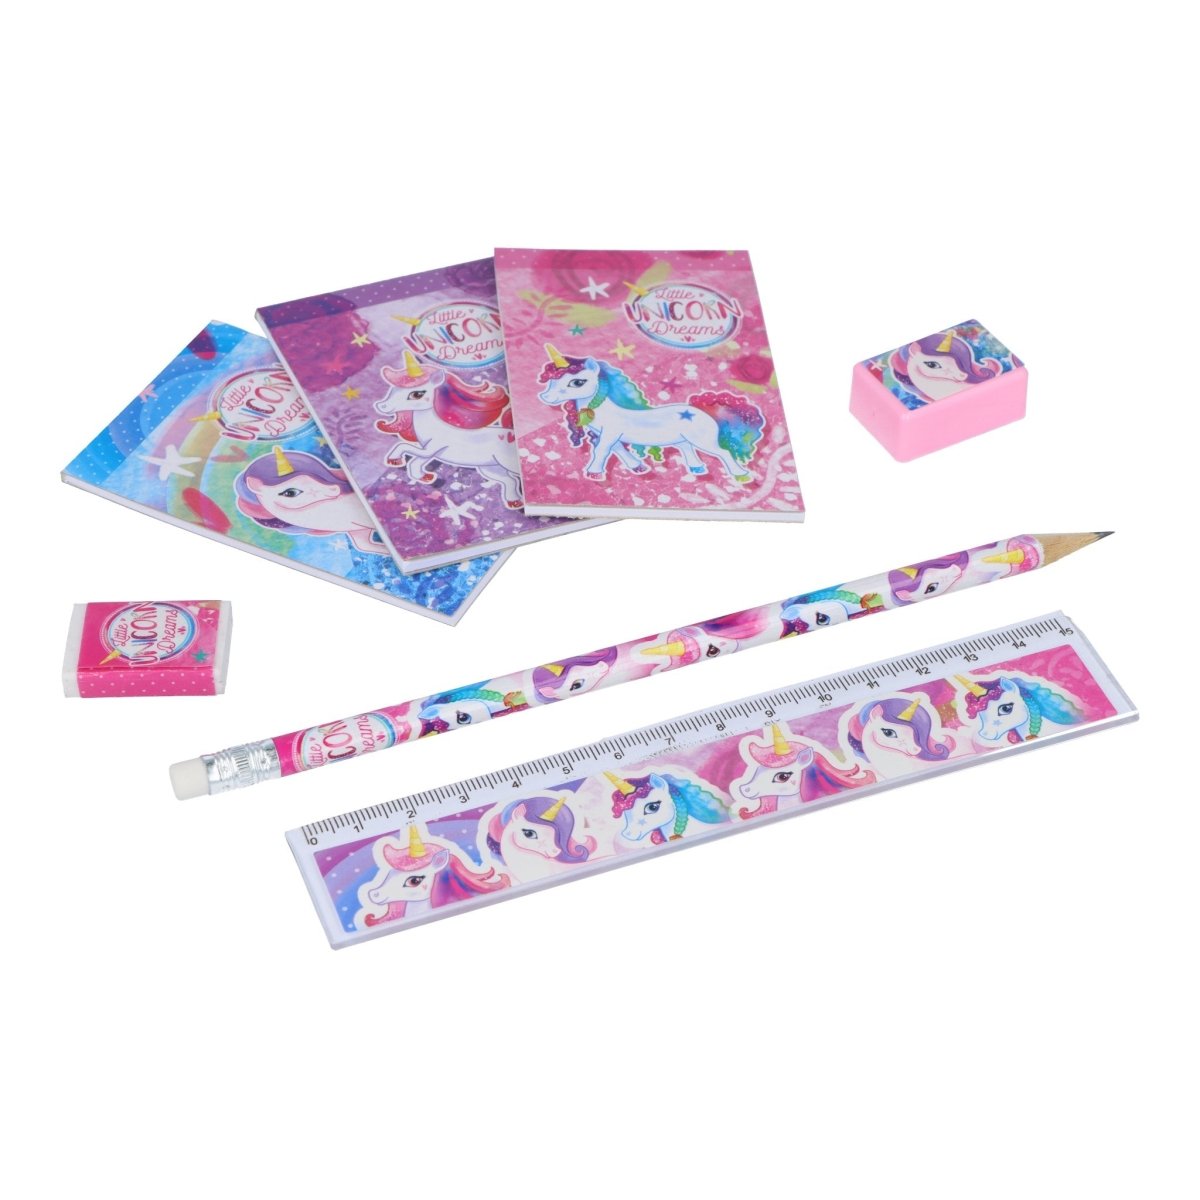 Unicorn Stationery Set 5pc - Kids Party Craft